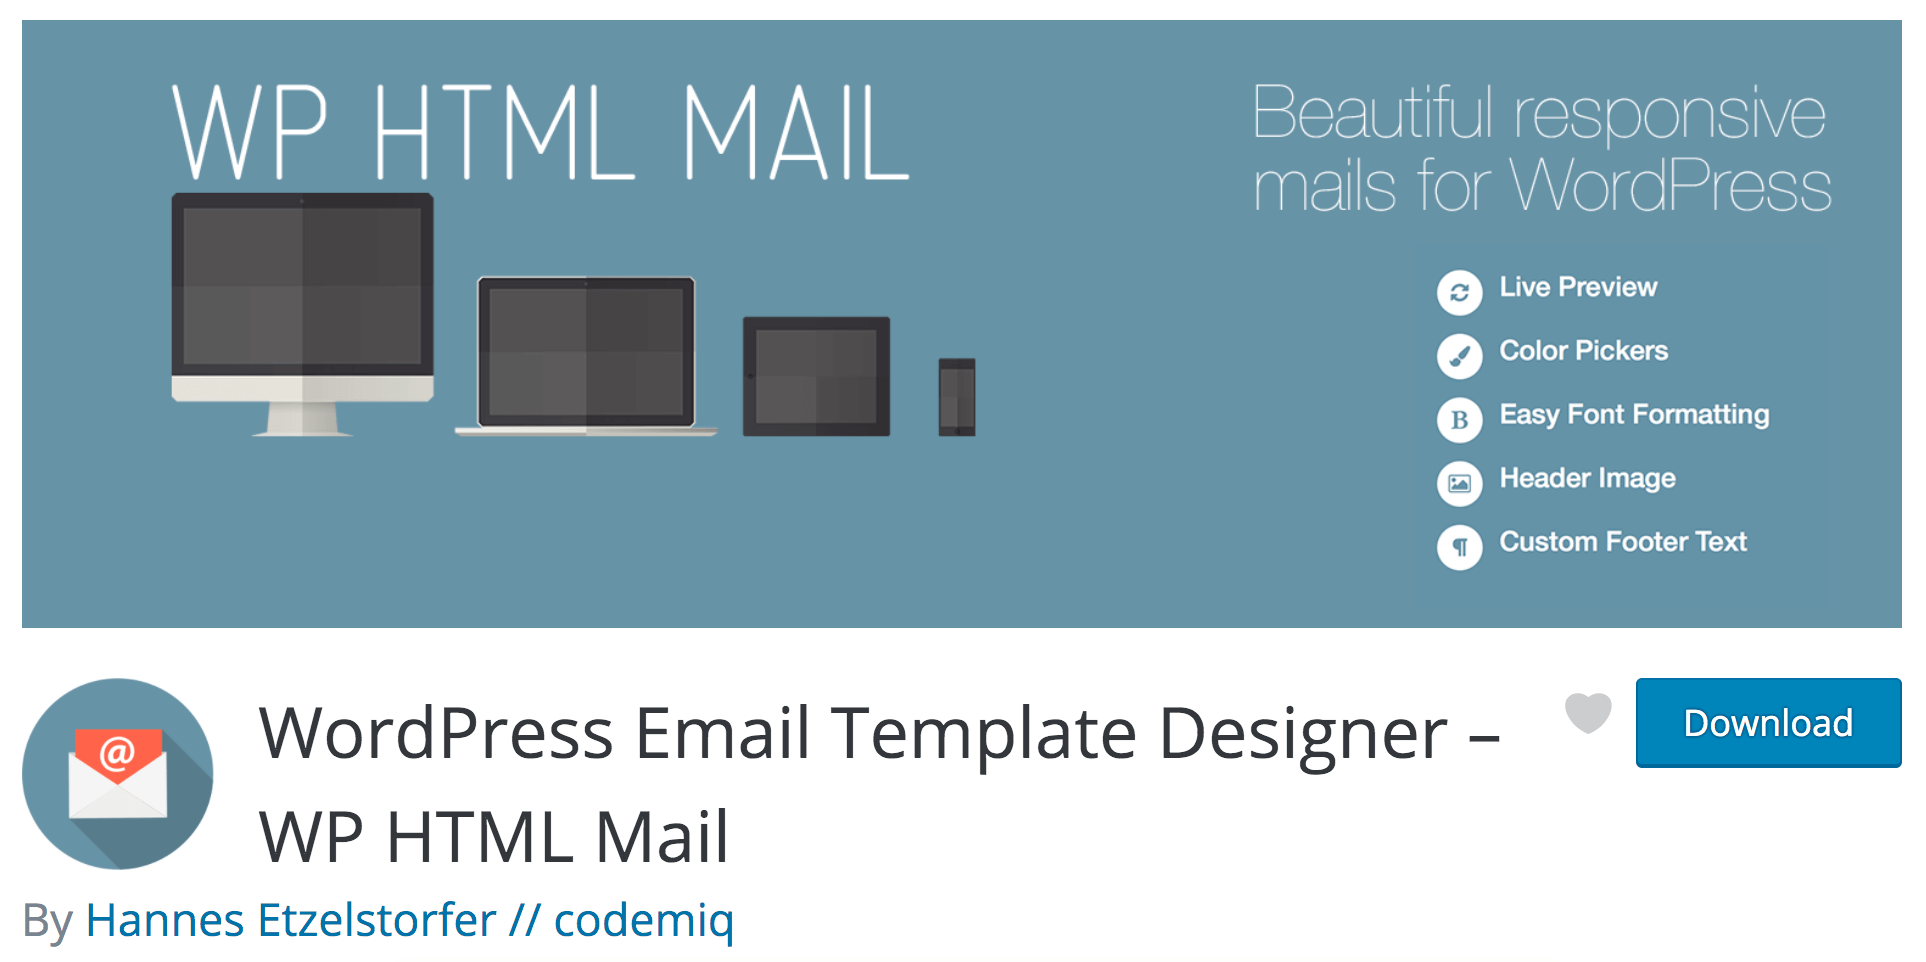 WP HTML Mail – Email Designer